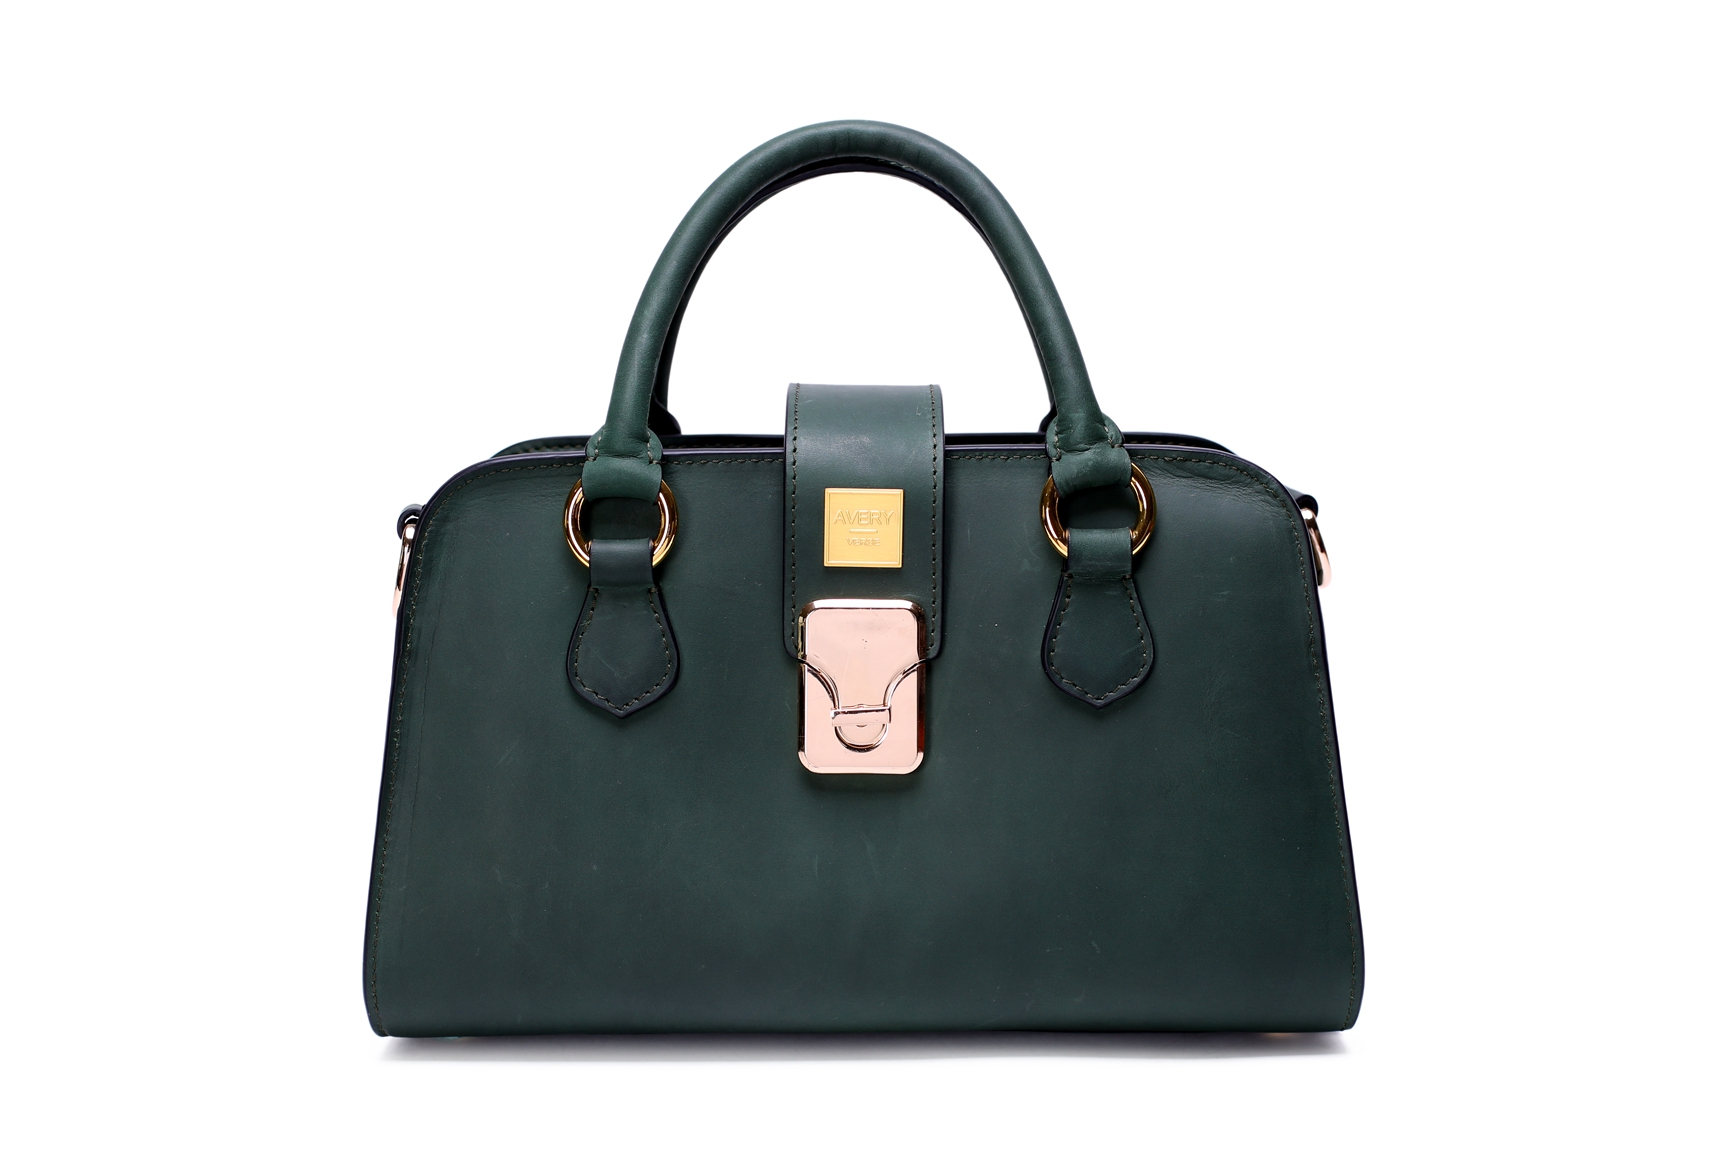 The Sublime Handbag in Green